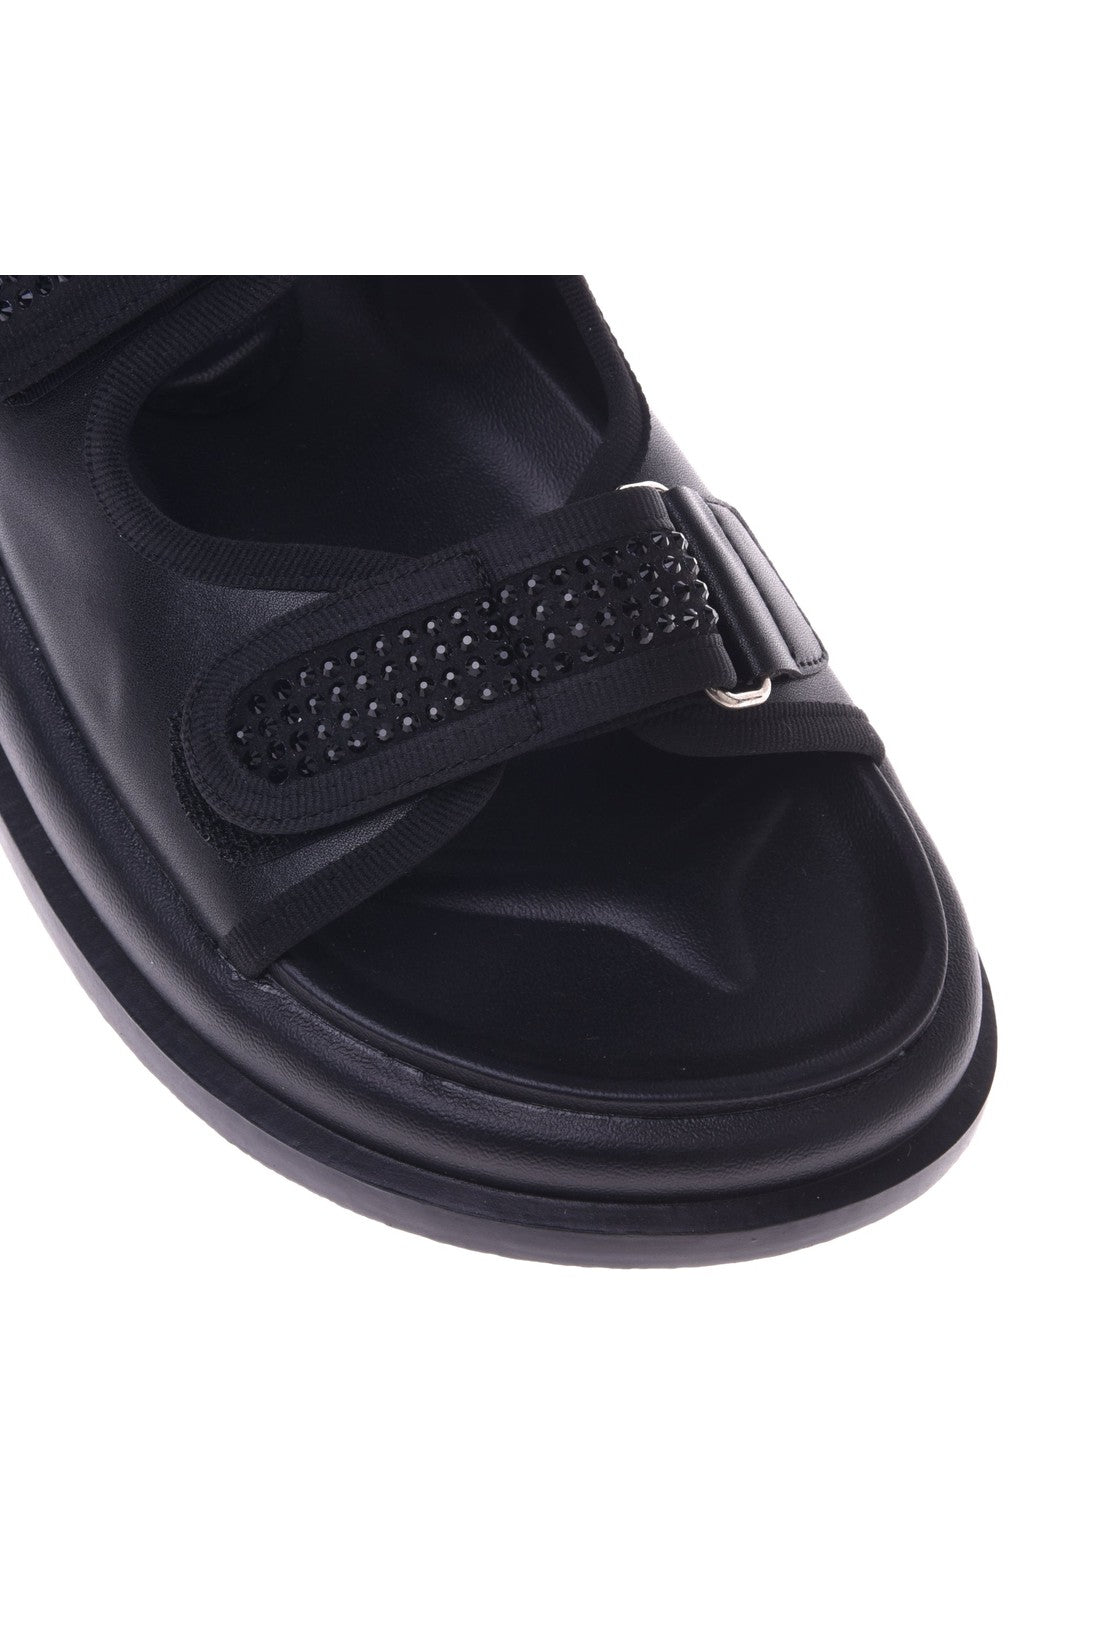 BALDININI-OUTLET-SALE-Sandal-in-black-calfskin-with-rhinestones-Sandalen-ARCHIVE-COLLECTION-4.jpg